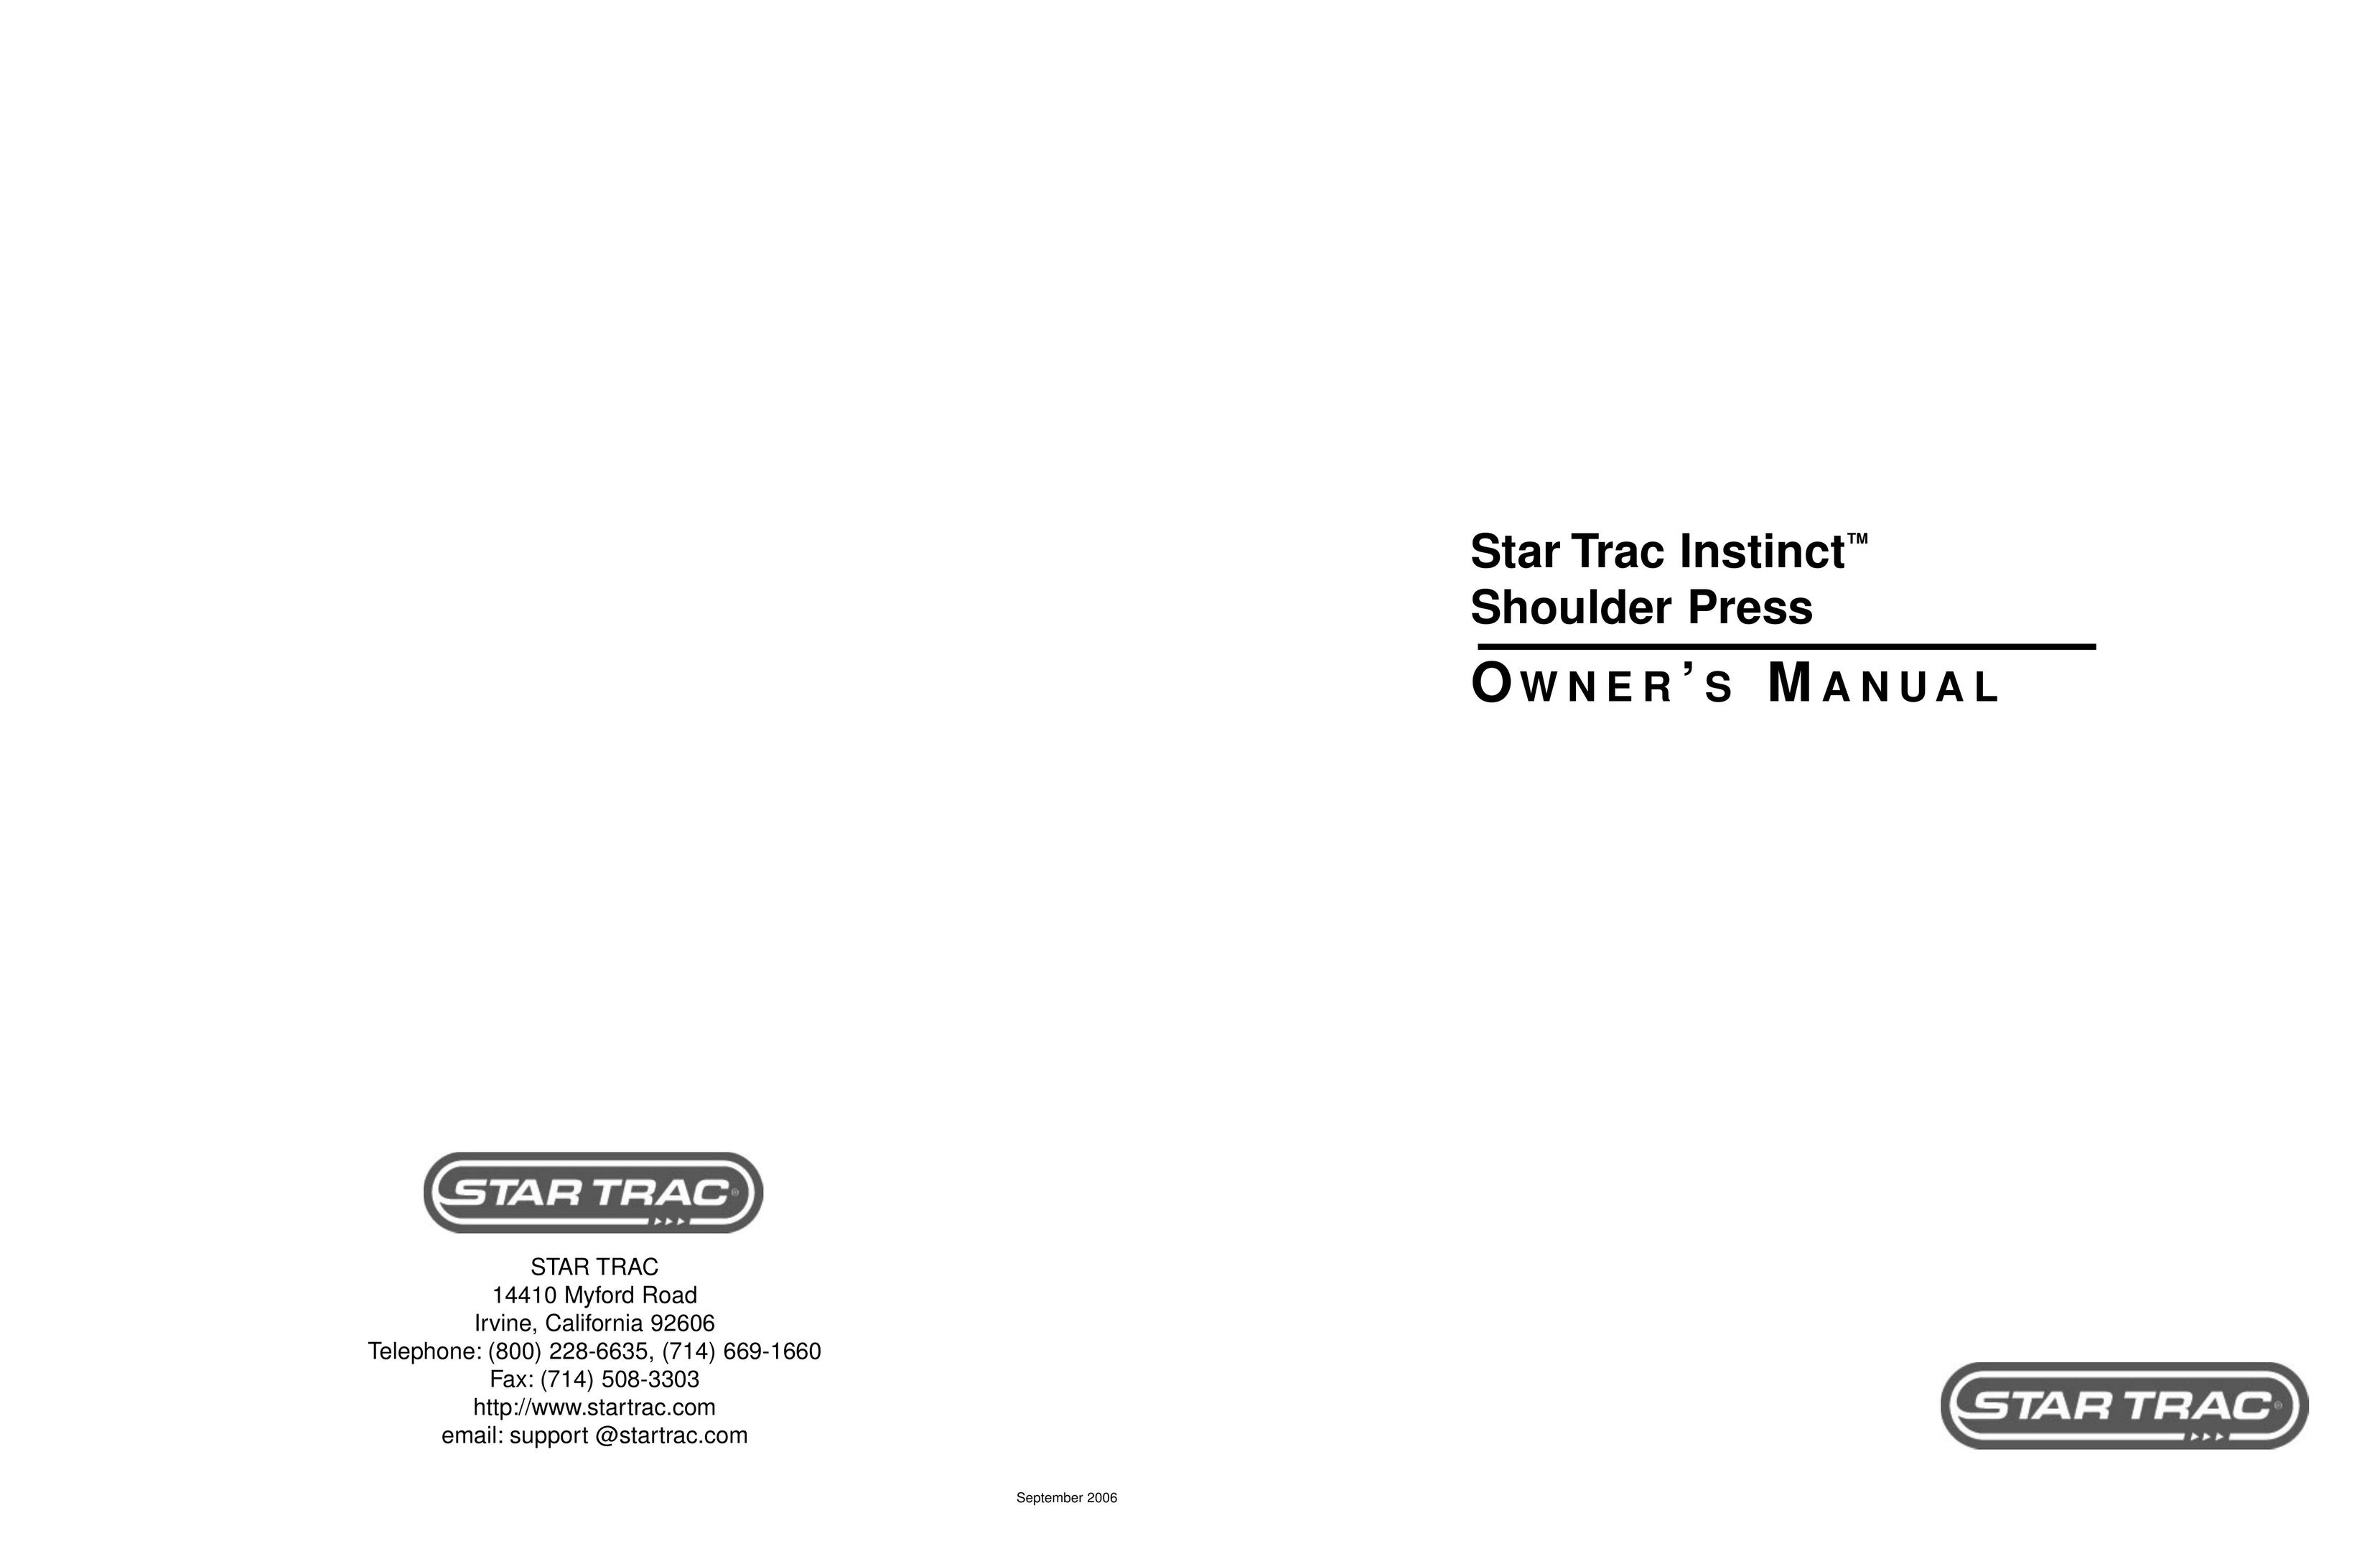 Star Trac Shoulder Press Home Gym User Manual